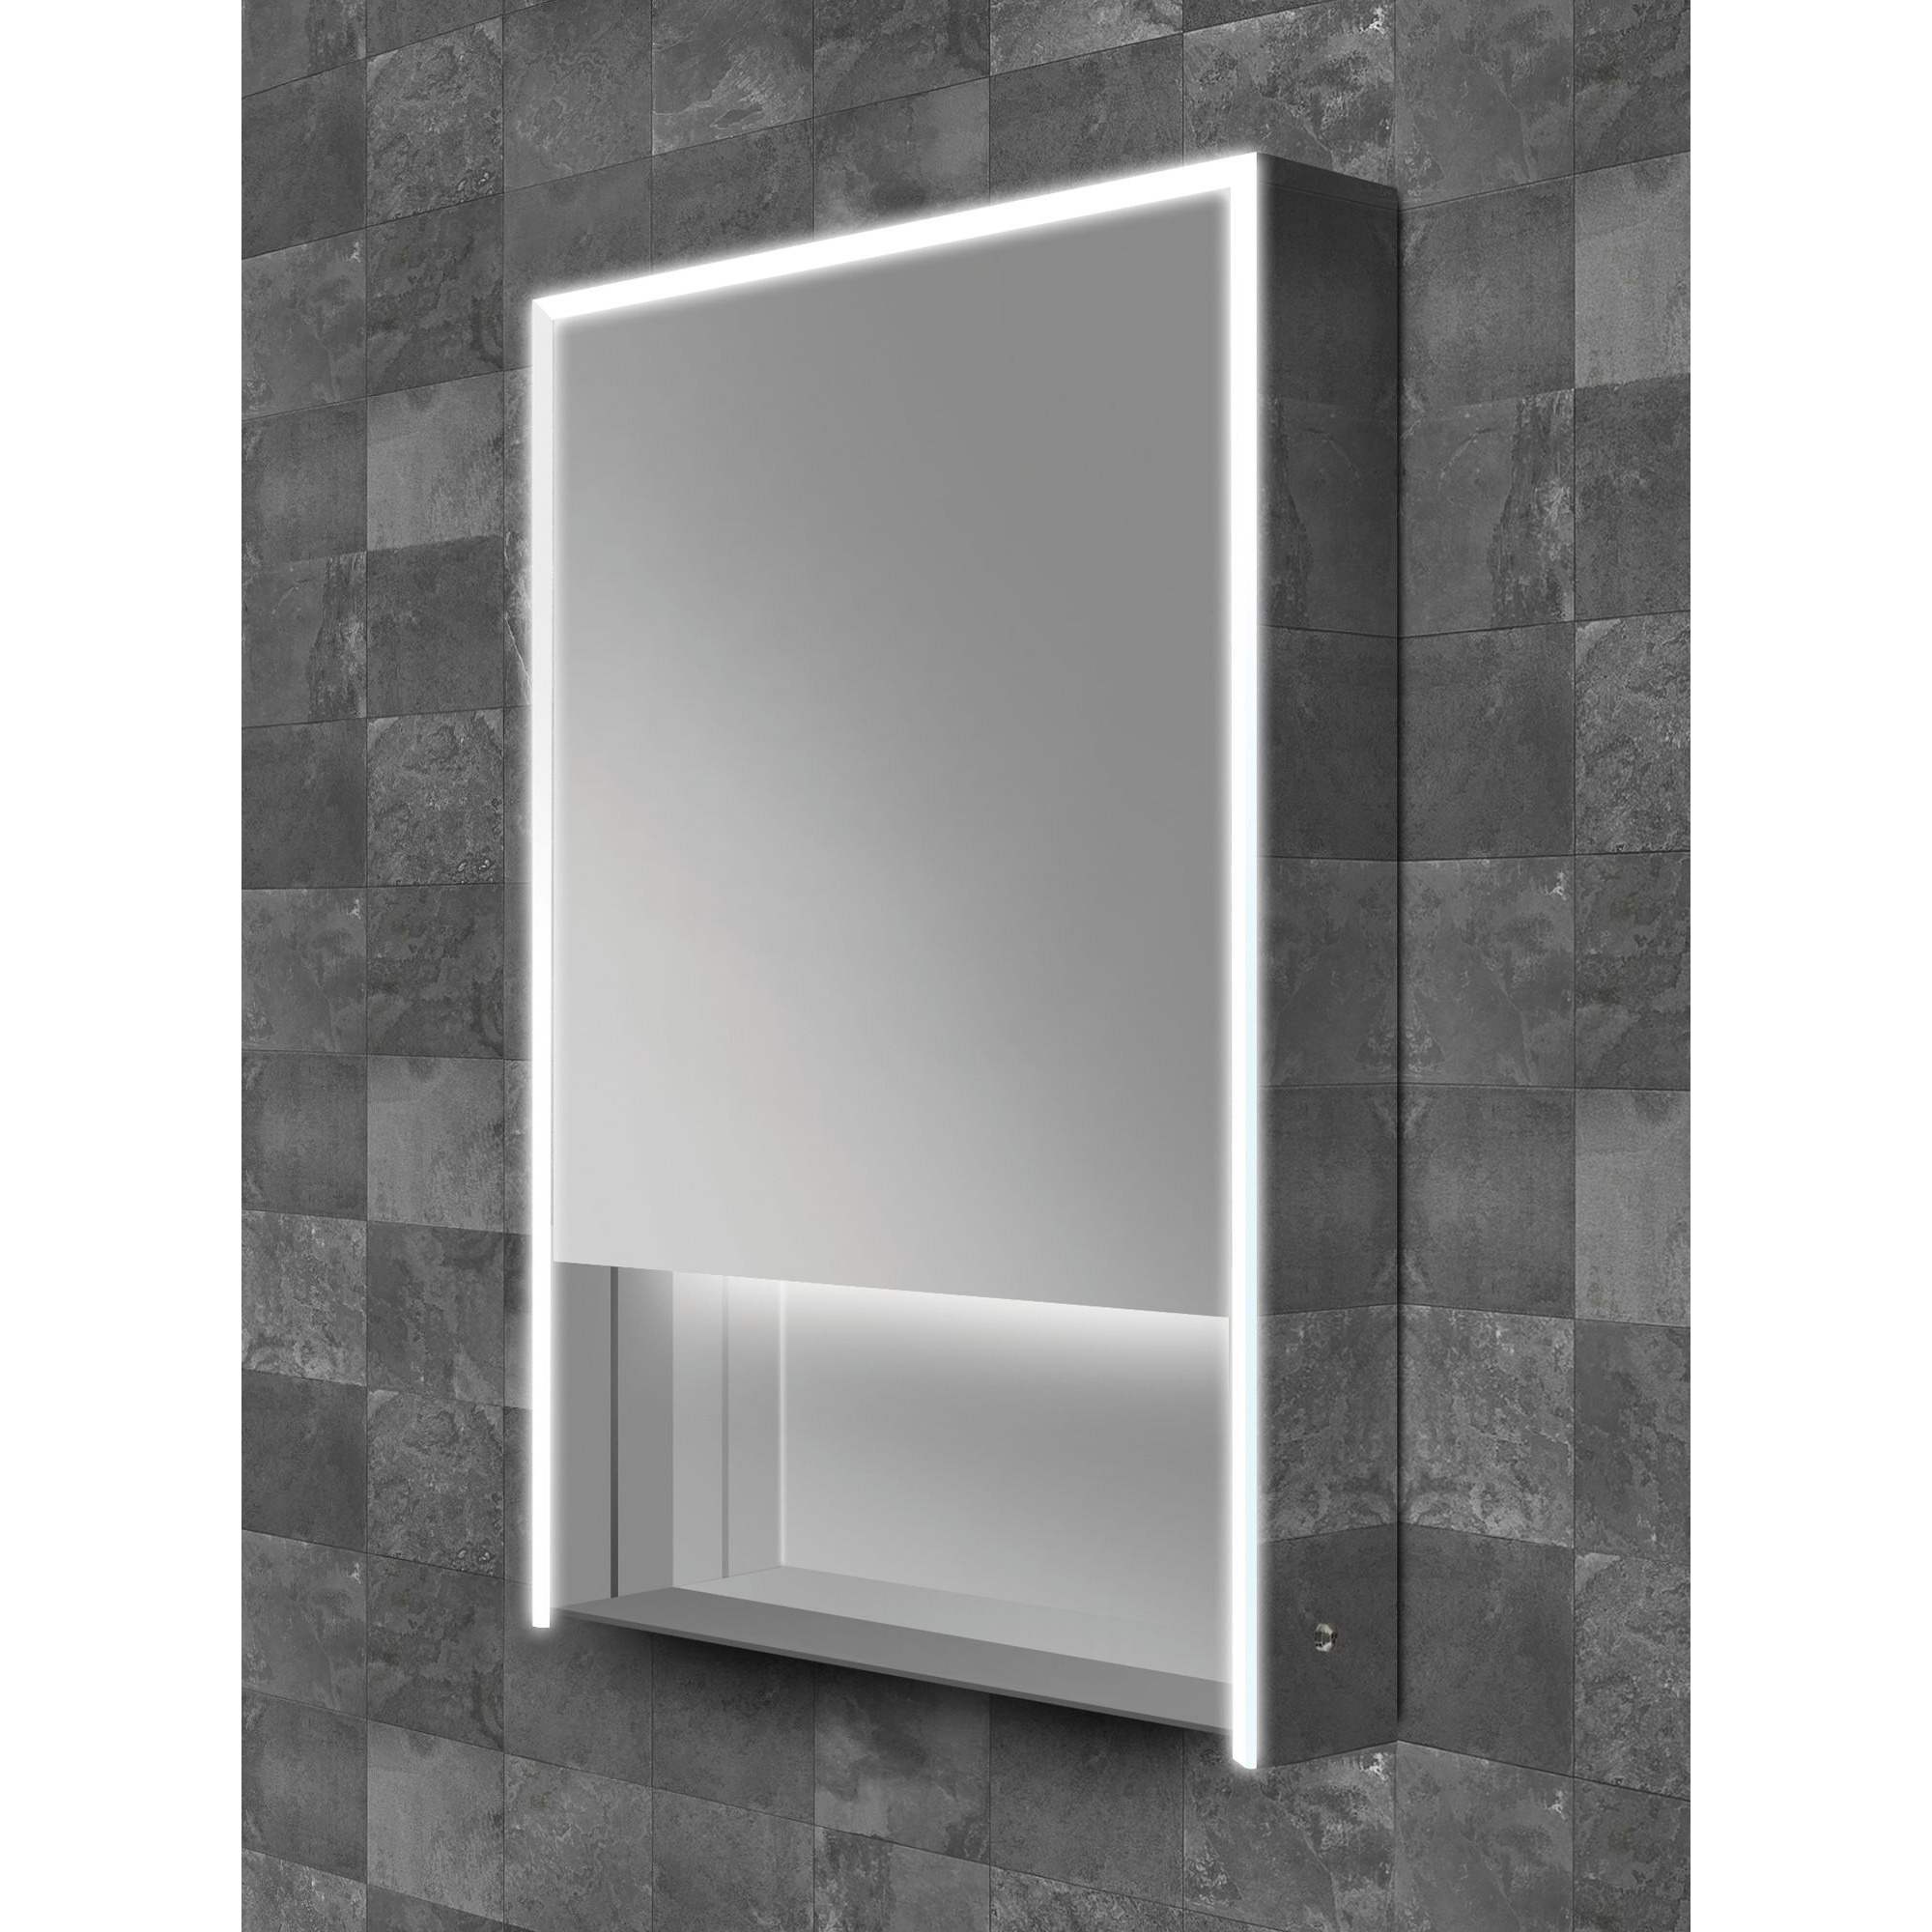 John Lewis Shelf Single Mirrored and Illuminated Bathroom Cabinet - image 1